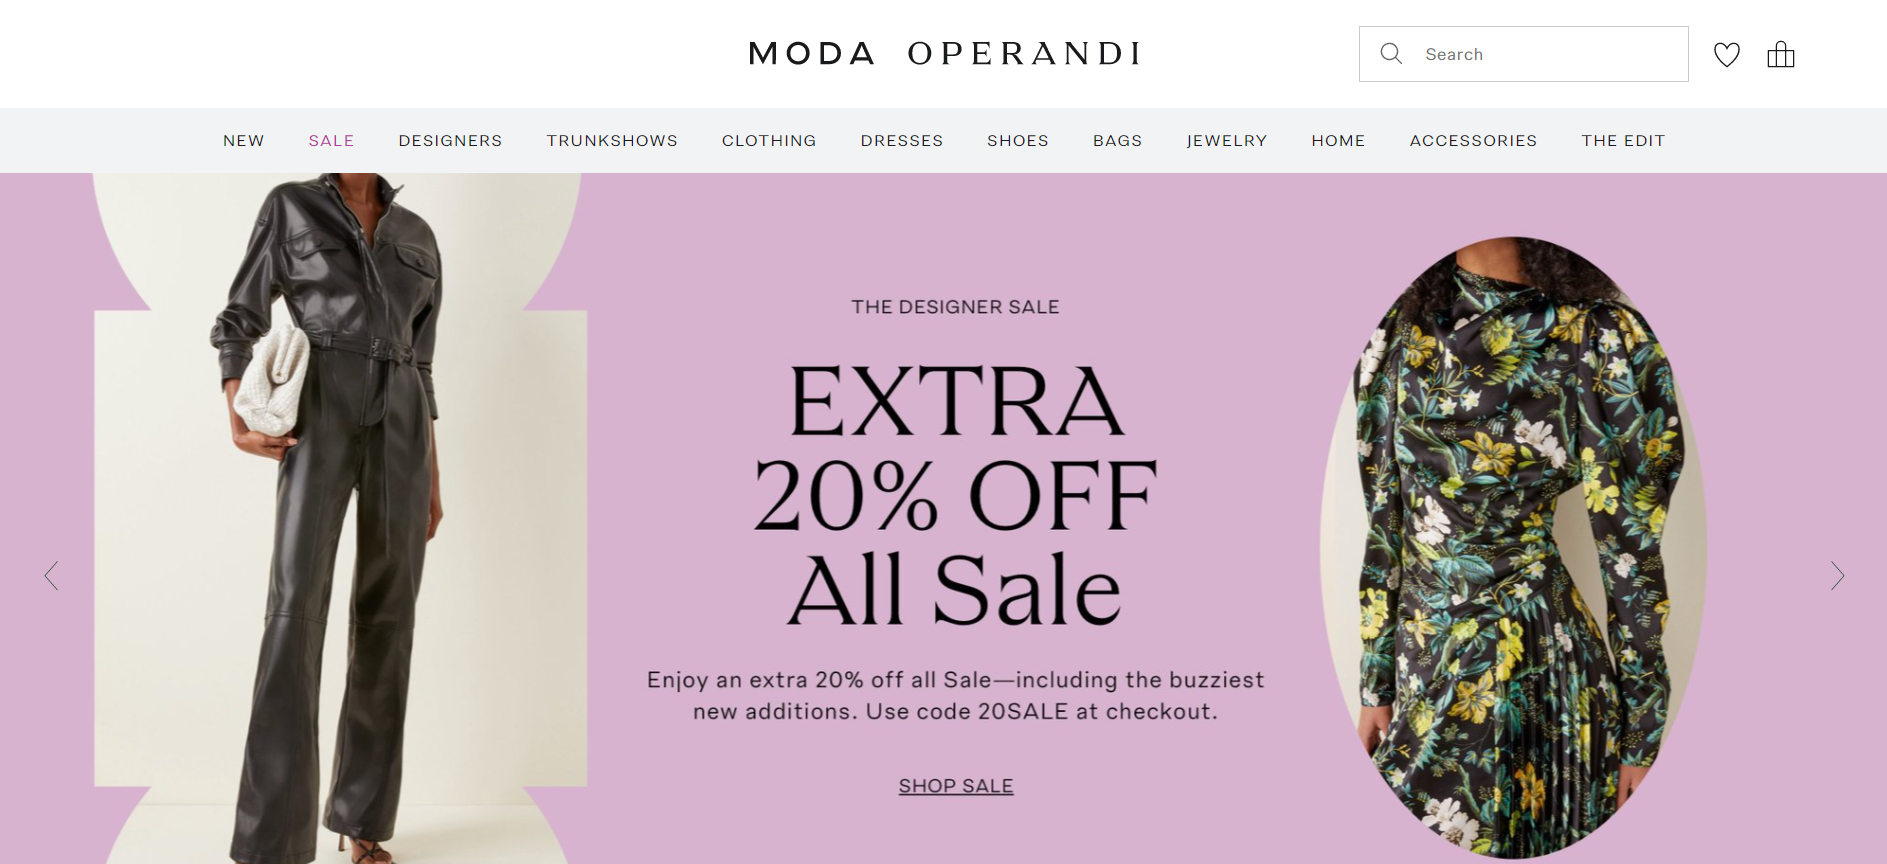 Moda Operandi website homepage